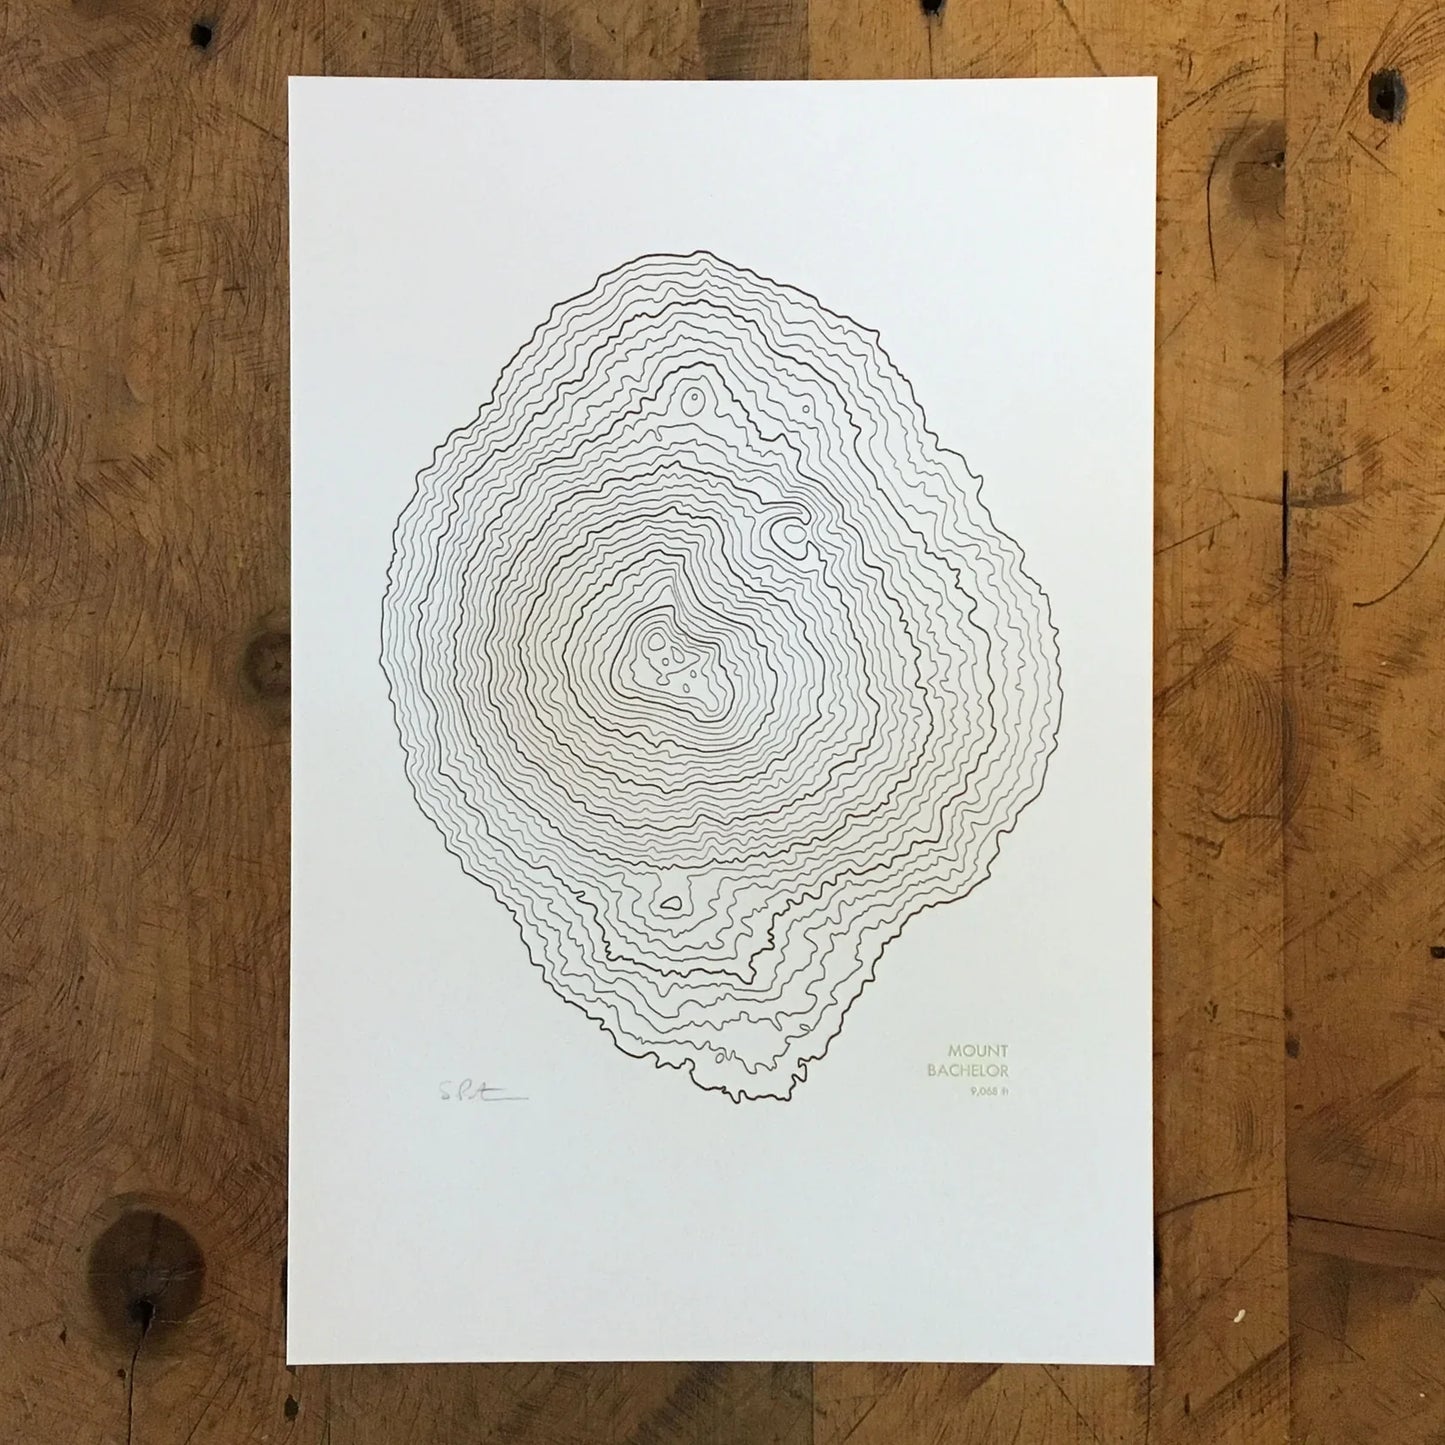 Framed - Mount Bachelor Topographic Map Letterpress Print by Green Bird Press